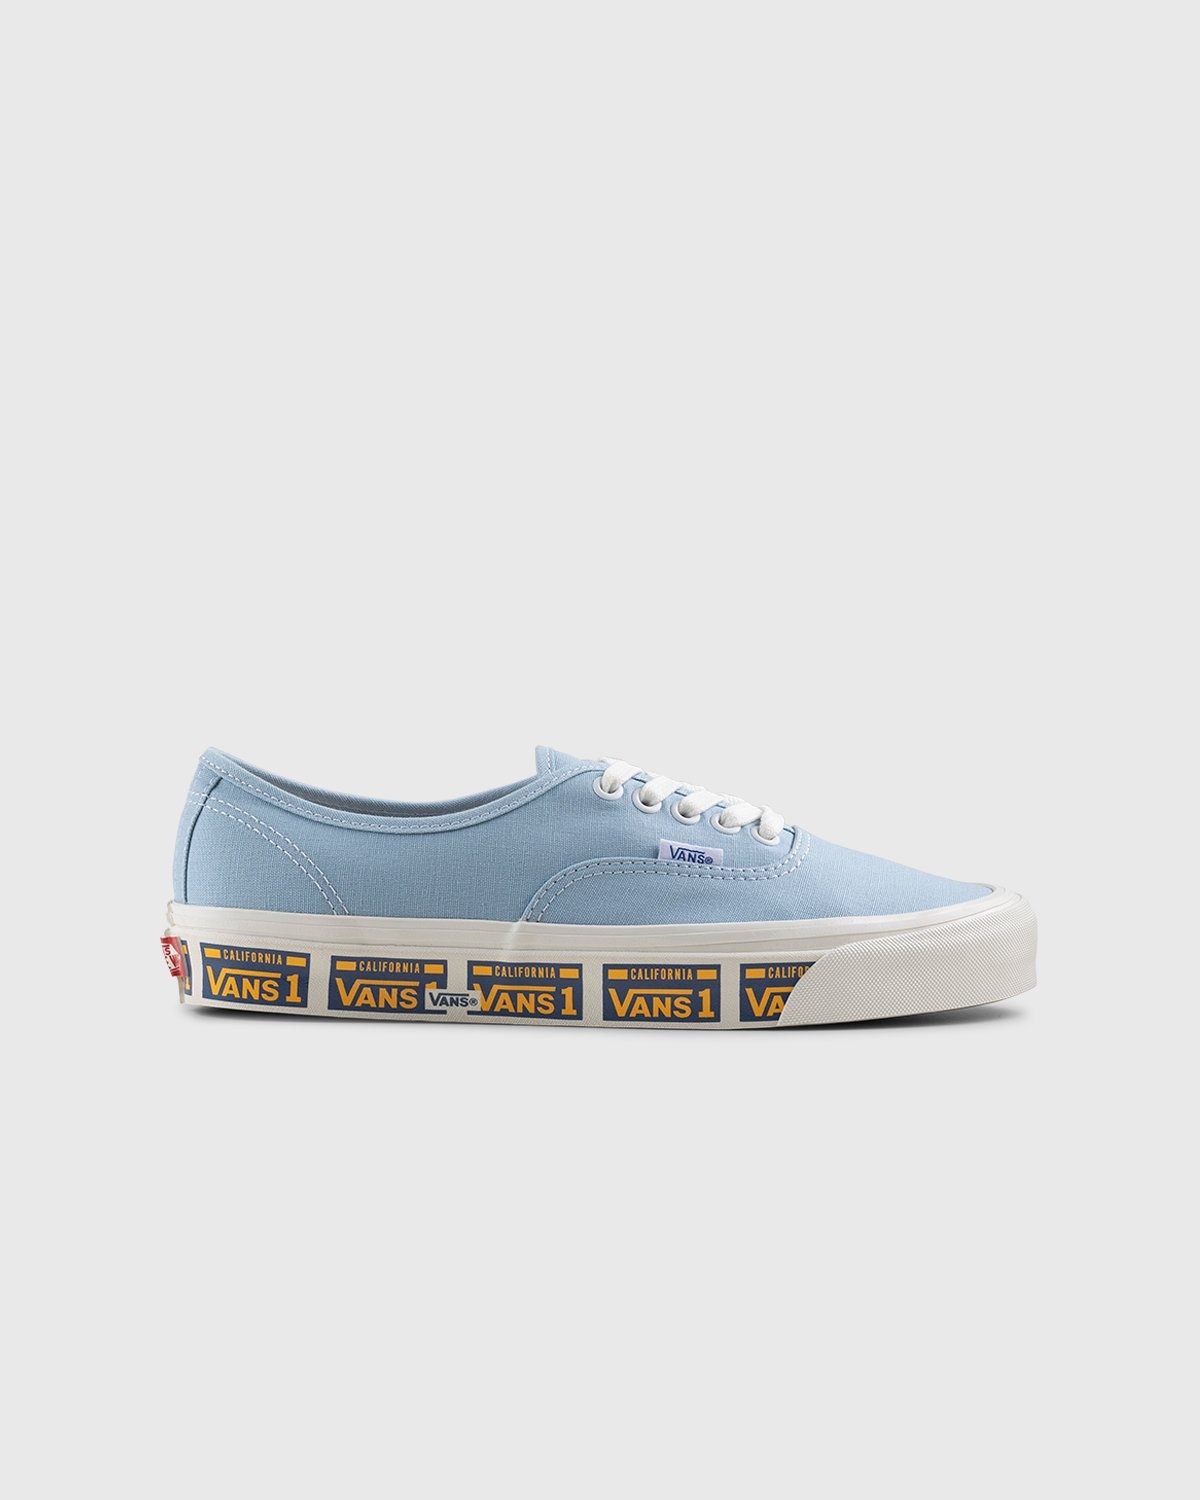 Vans – Anaheim Factory Authentic 44 DX Vanity Plate Lightblue - Sneakers - Blue - Image 1